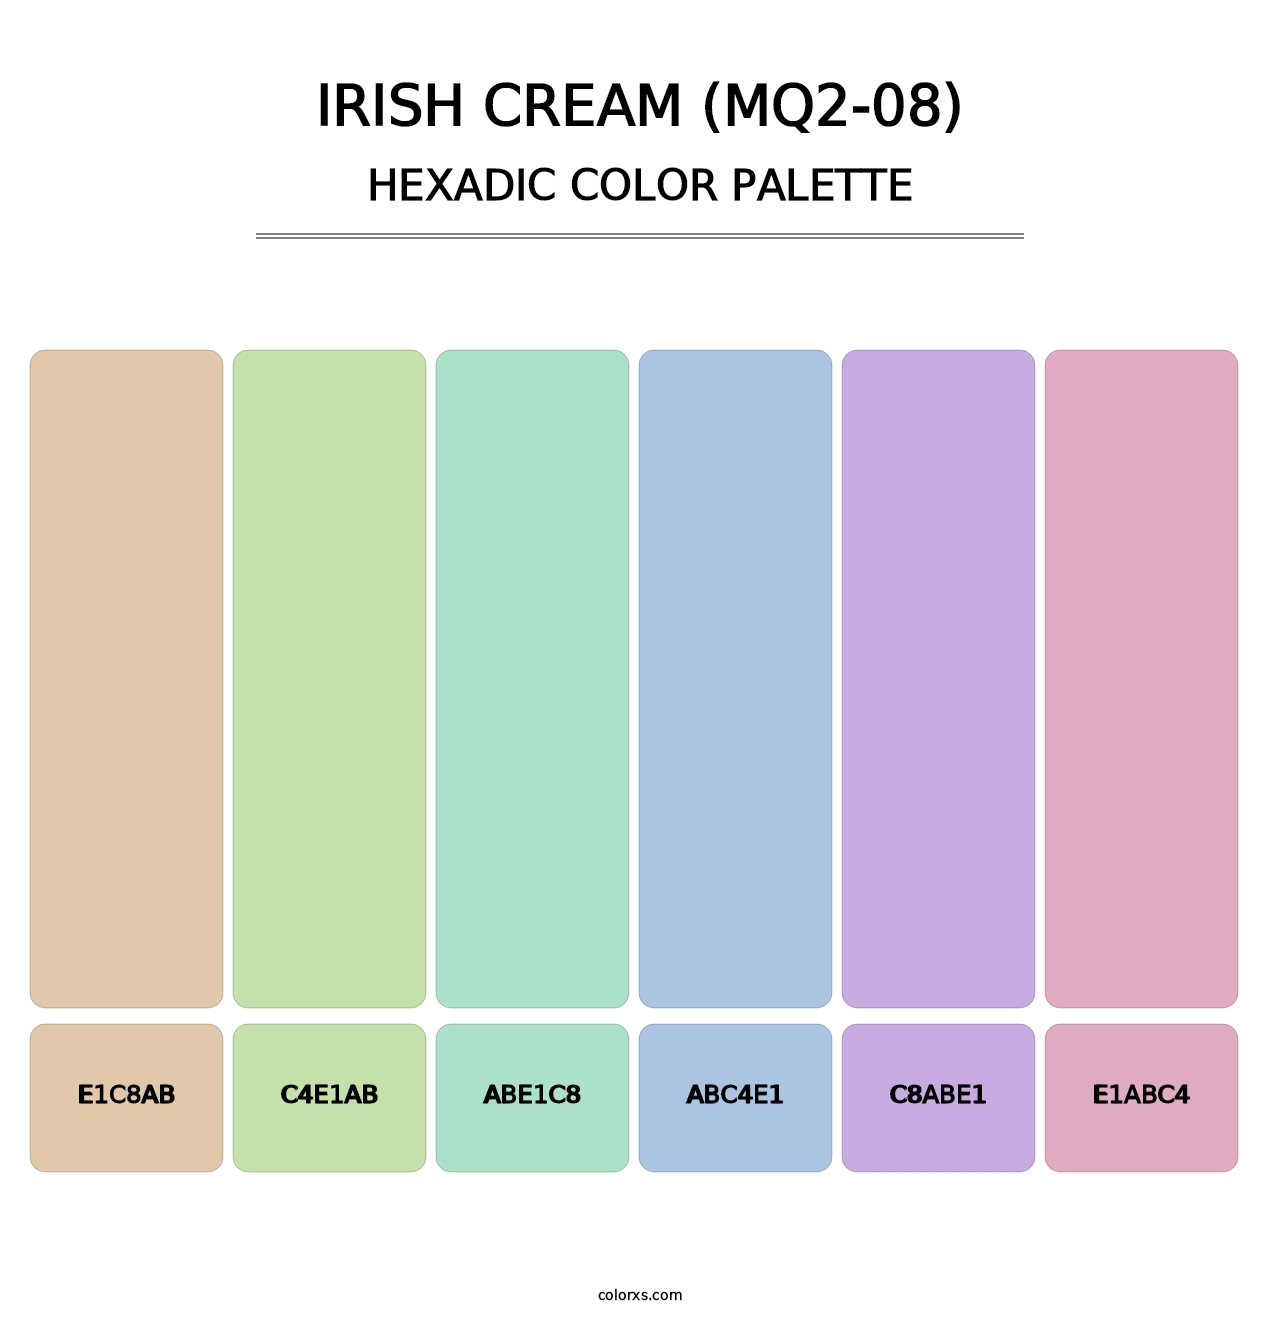 Irish Cream (MQ2-08) - Hexadic Color Palette